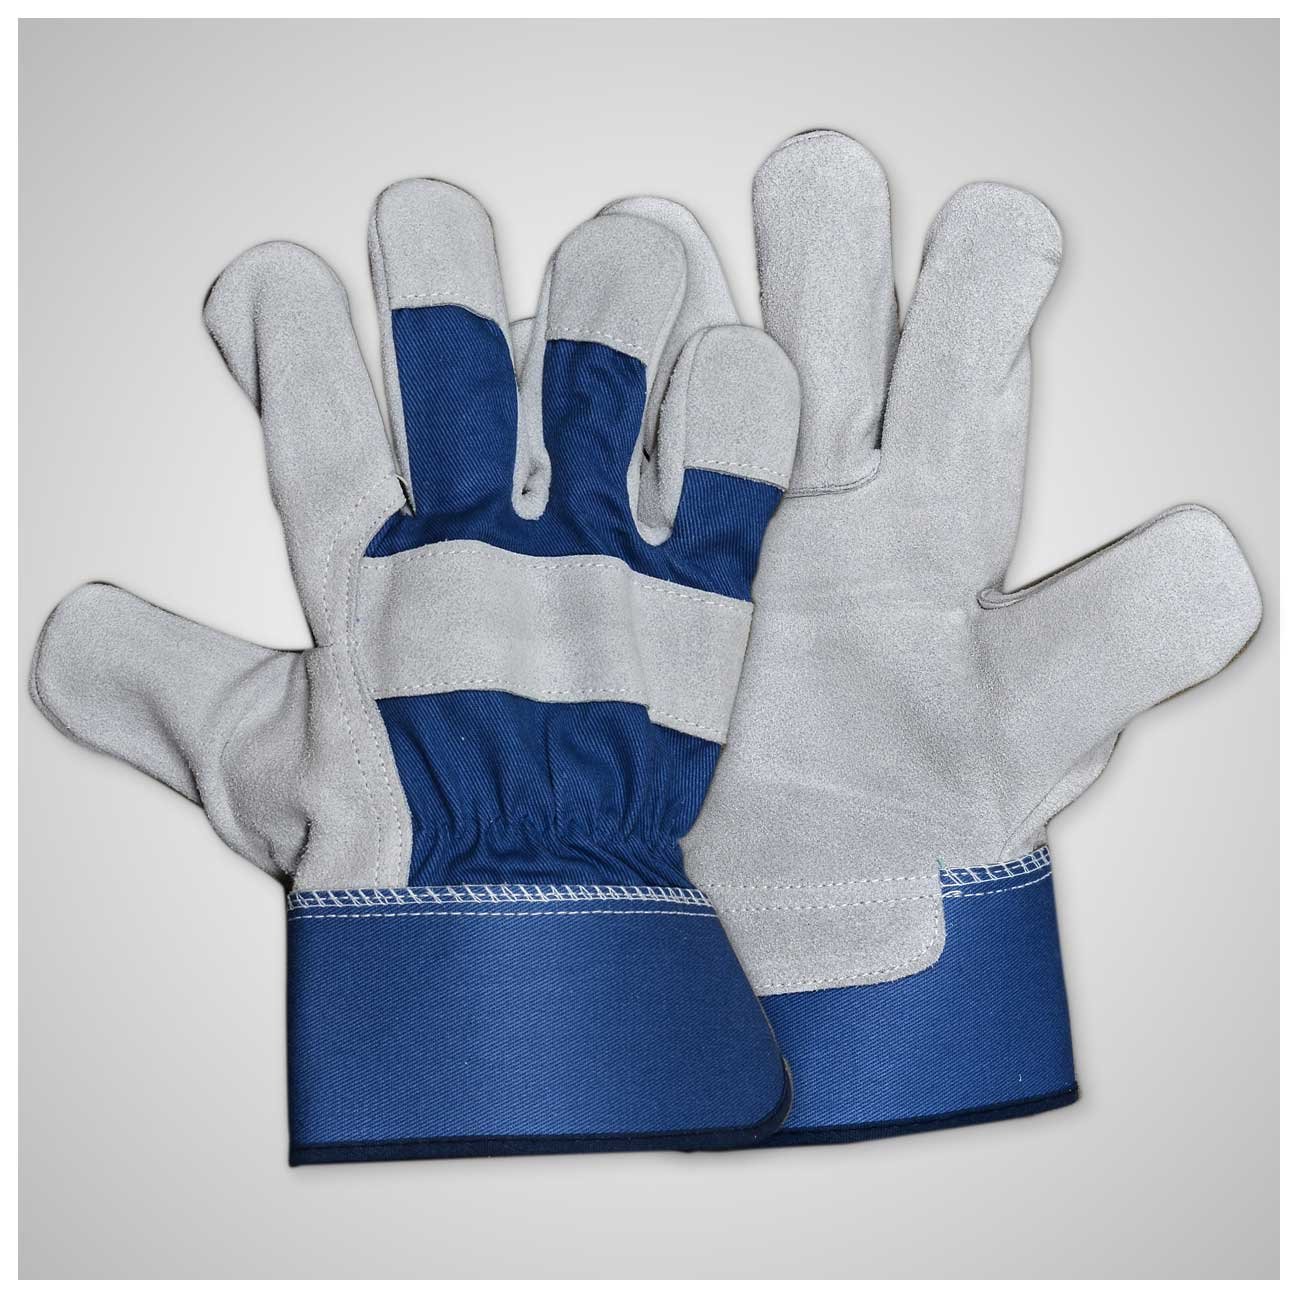 canadian gloves zenith 4 (1)